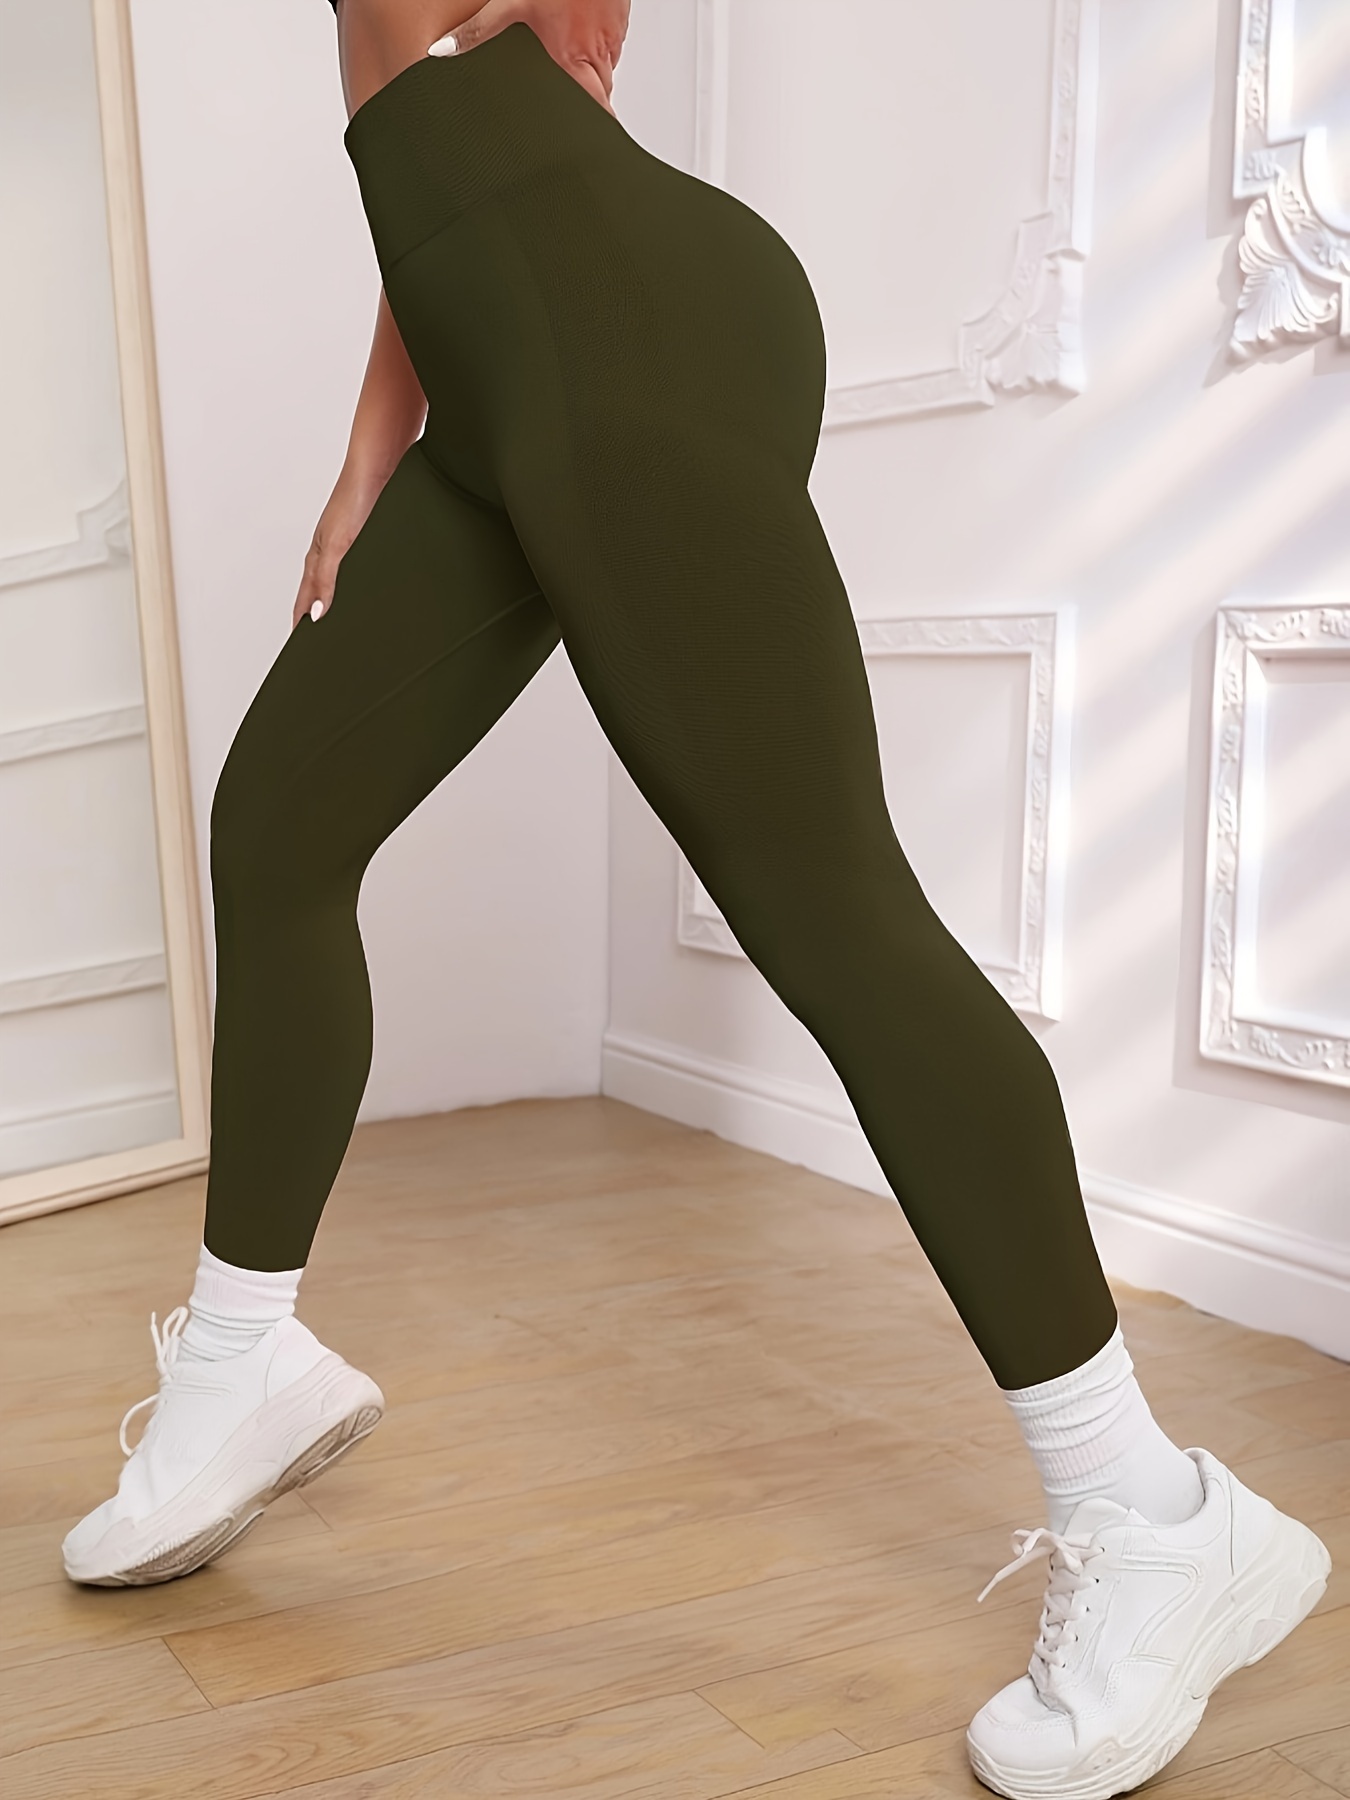 Green Leggings, Solid Yoga Leggings, Yoga Shorts, Active Wear for